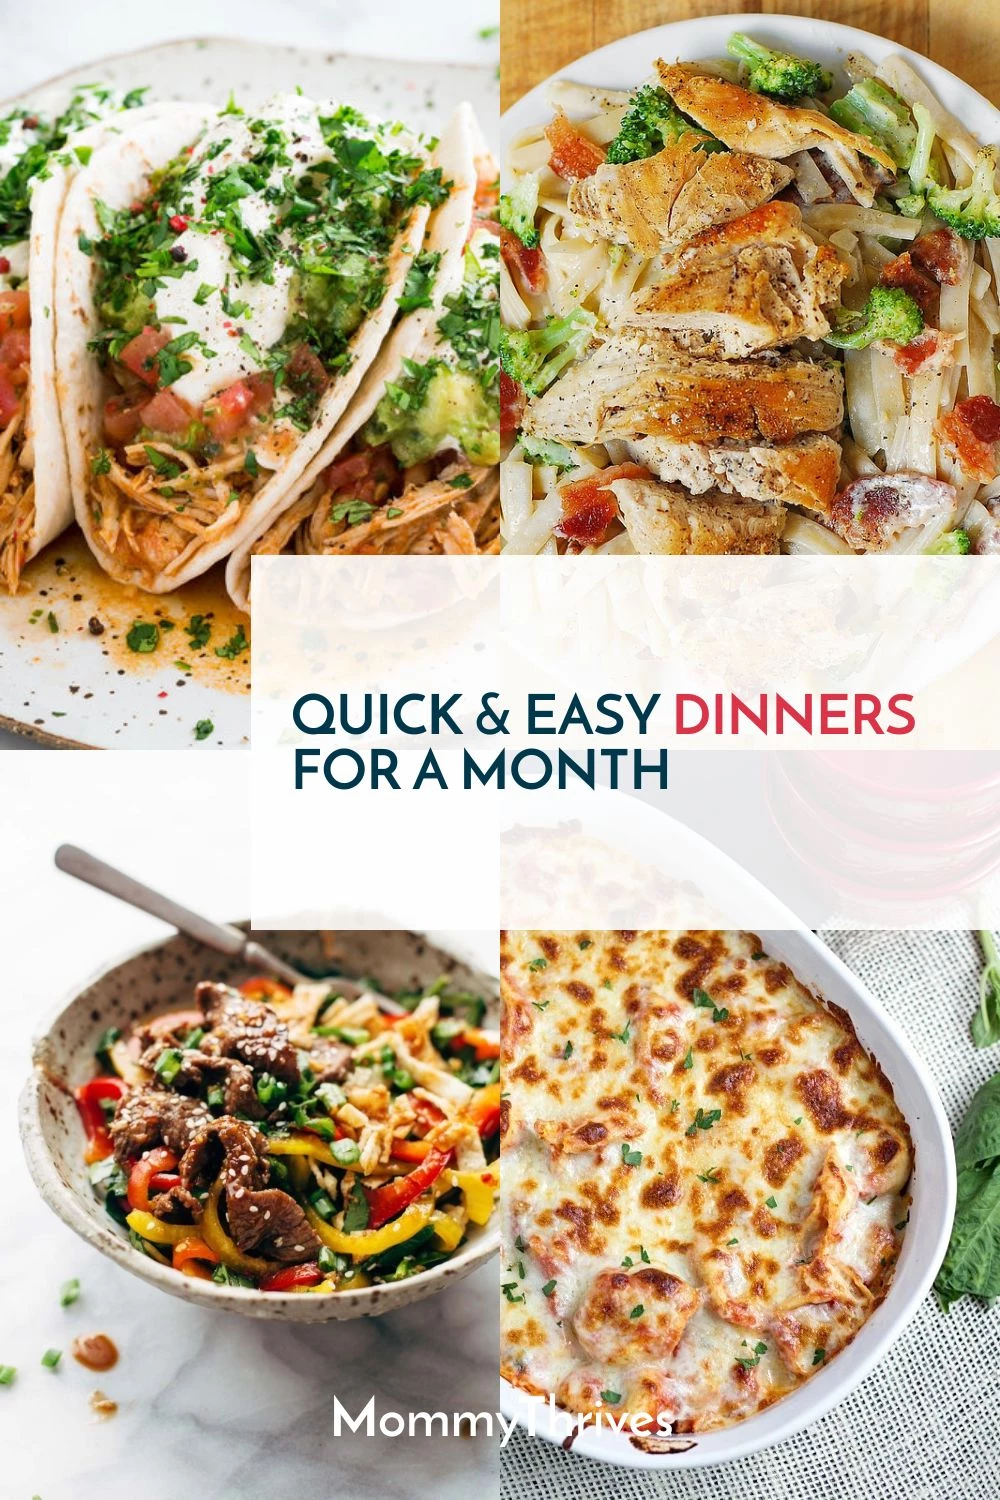 6 easy steps that make planning family meals effortless